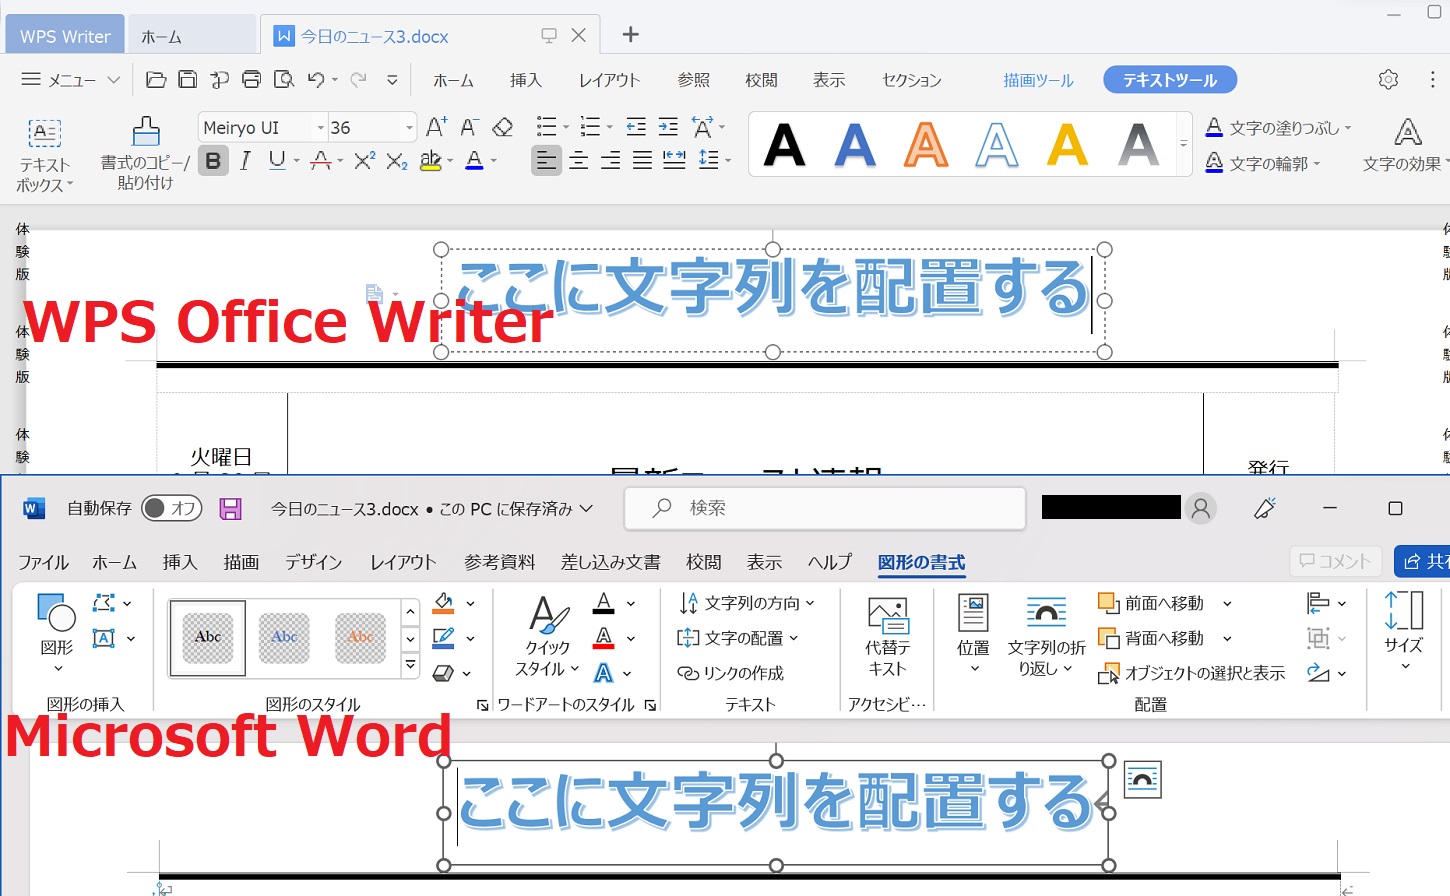 WPS Office WriterとMicrosoft Wordのワードアートには互換性がある